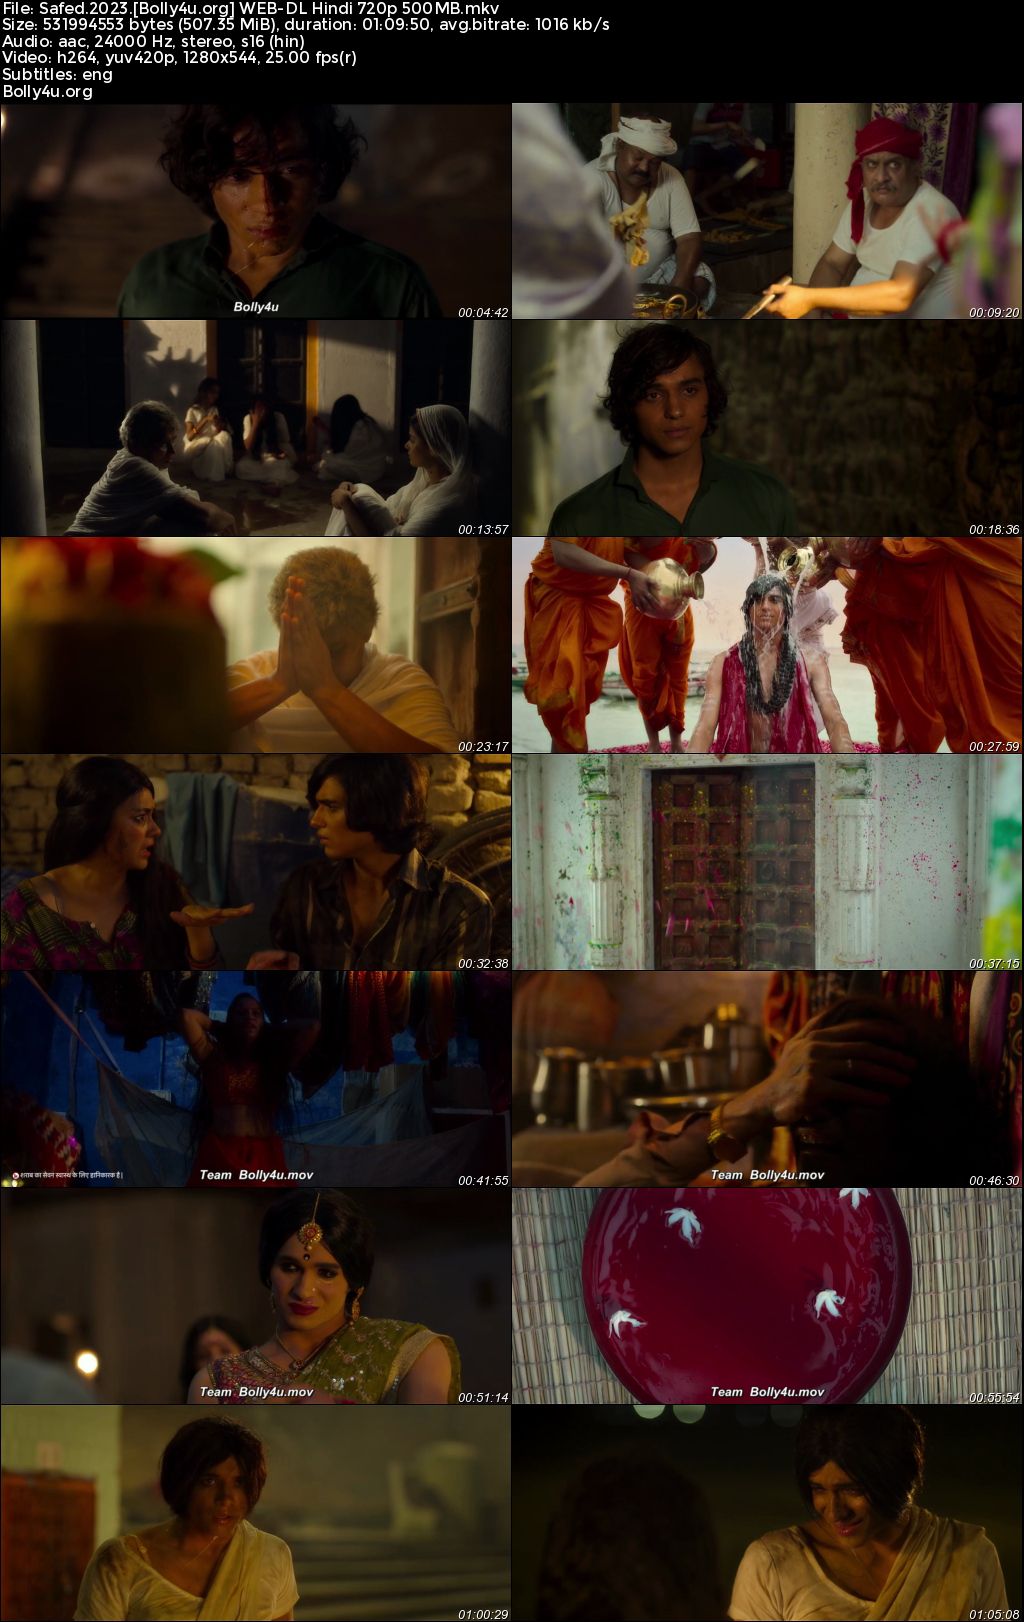 Safed 2023 WEB-DL Hindi Full Movie Download 1080p 720p 480p